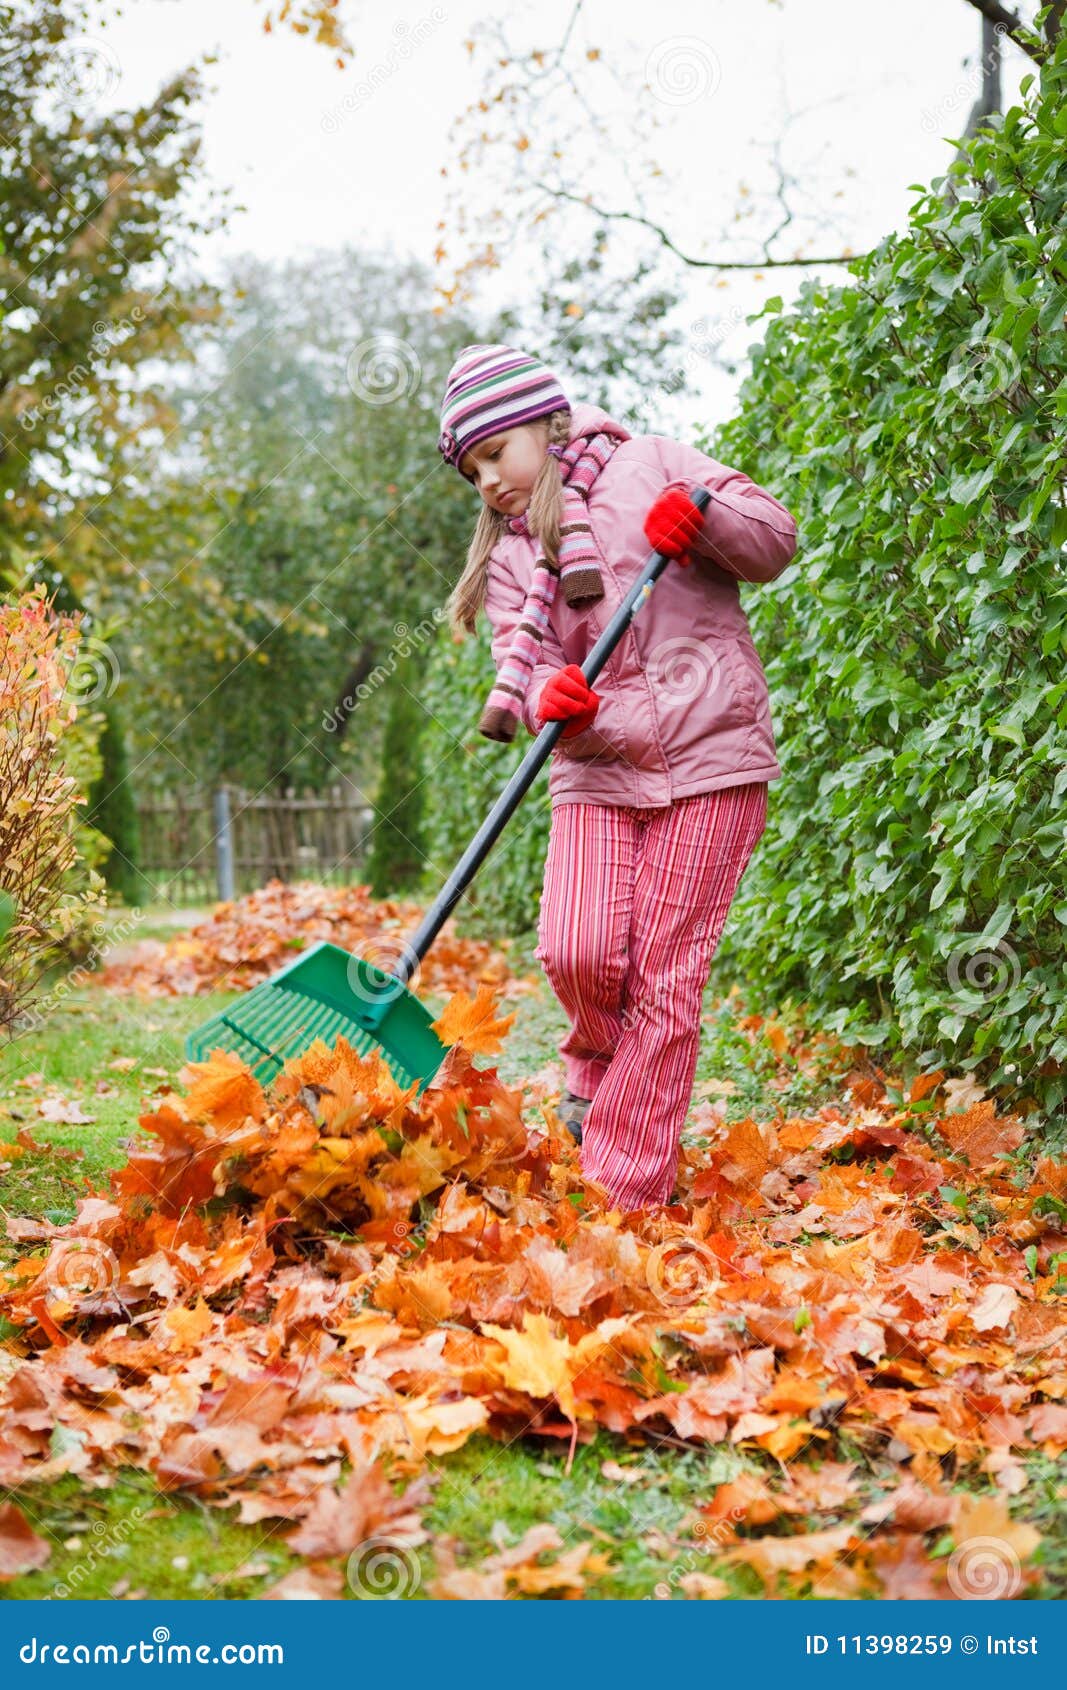 Little girl rake colorful fallen autumn leaves in garden.